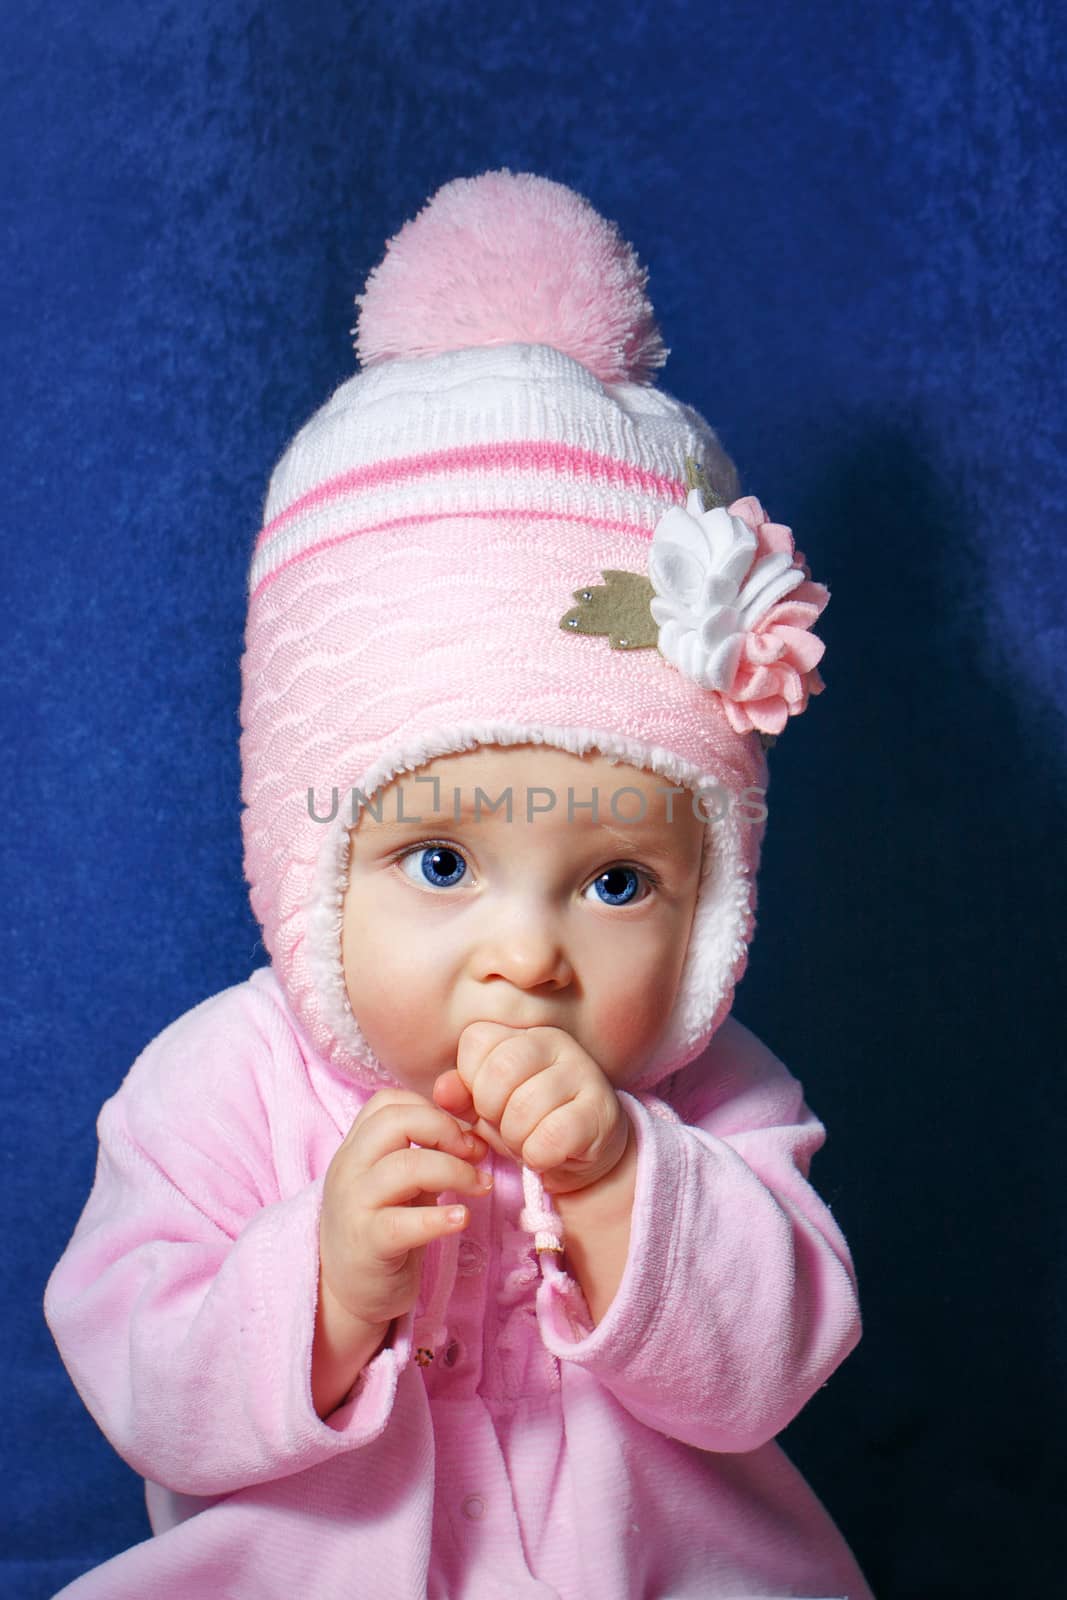 Cute little girl by Vagengeym